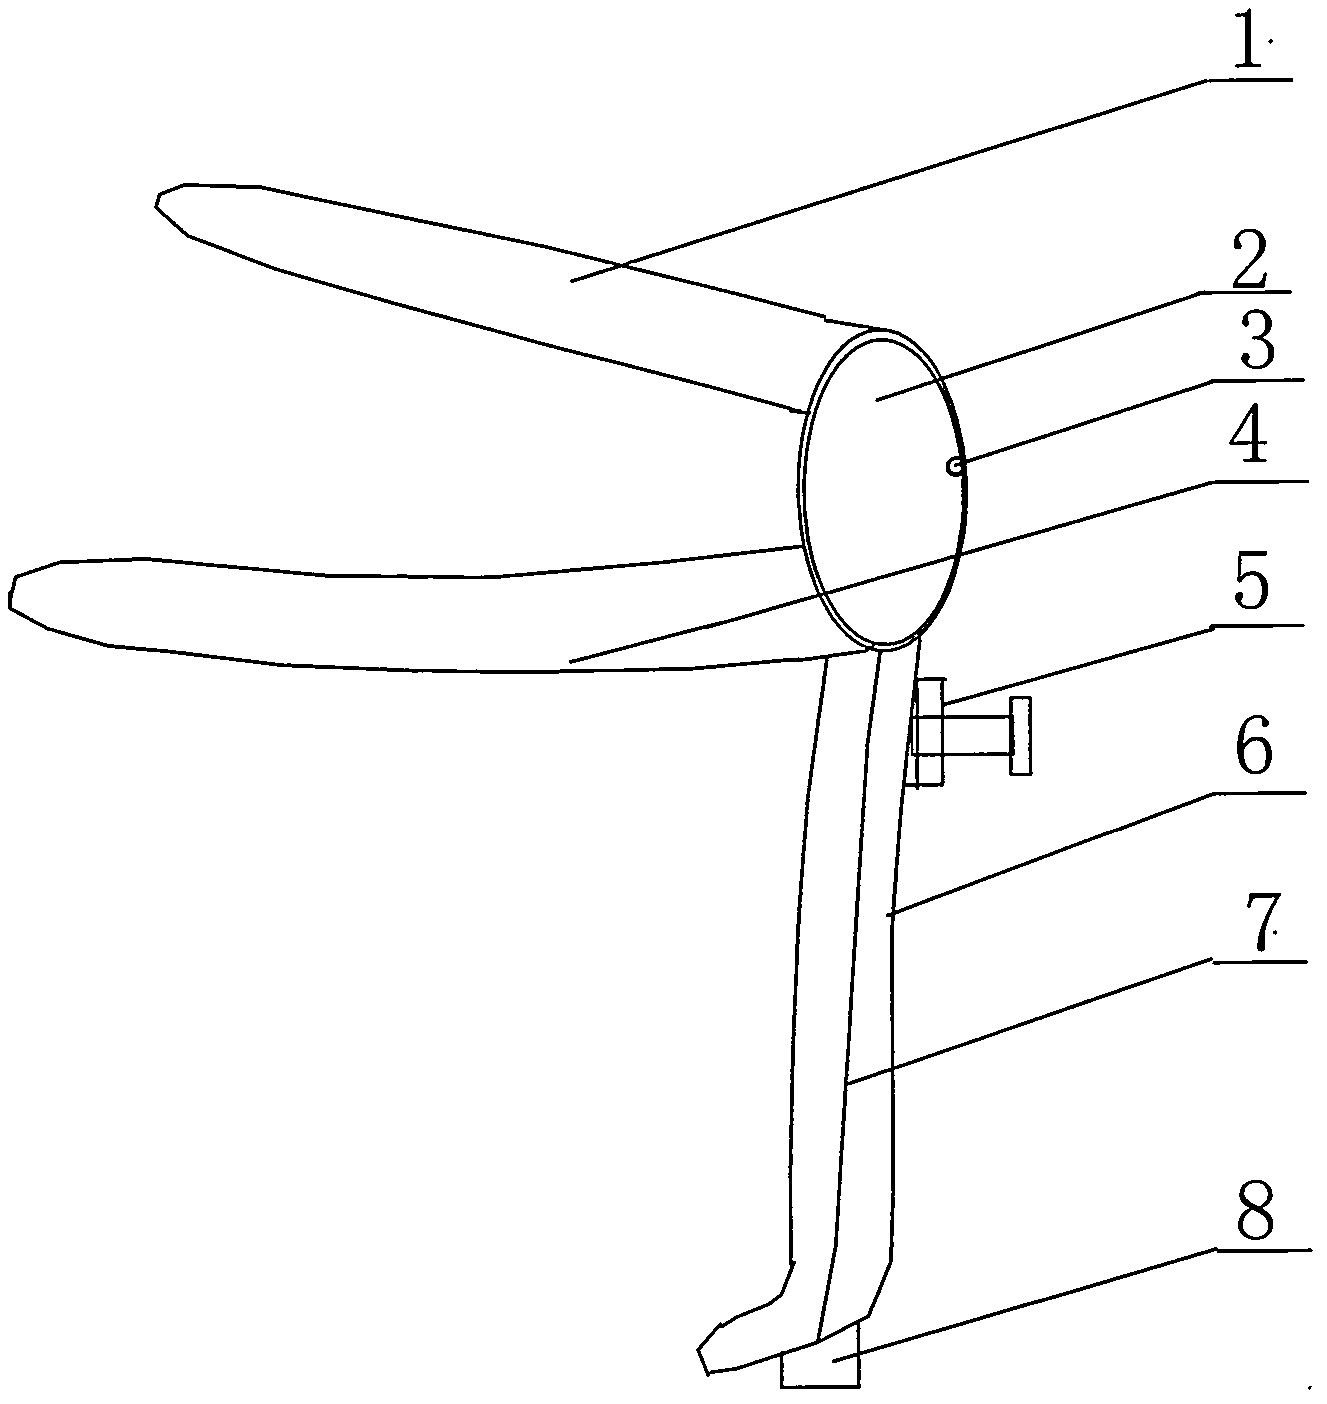 Vaginal dilator with optical fiber illumination device